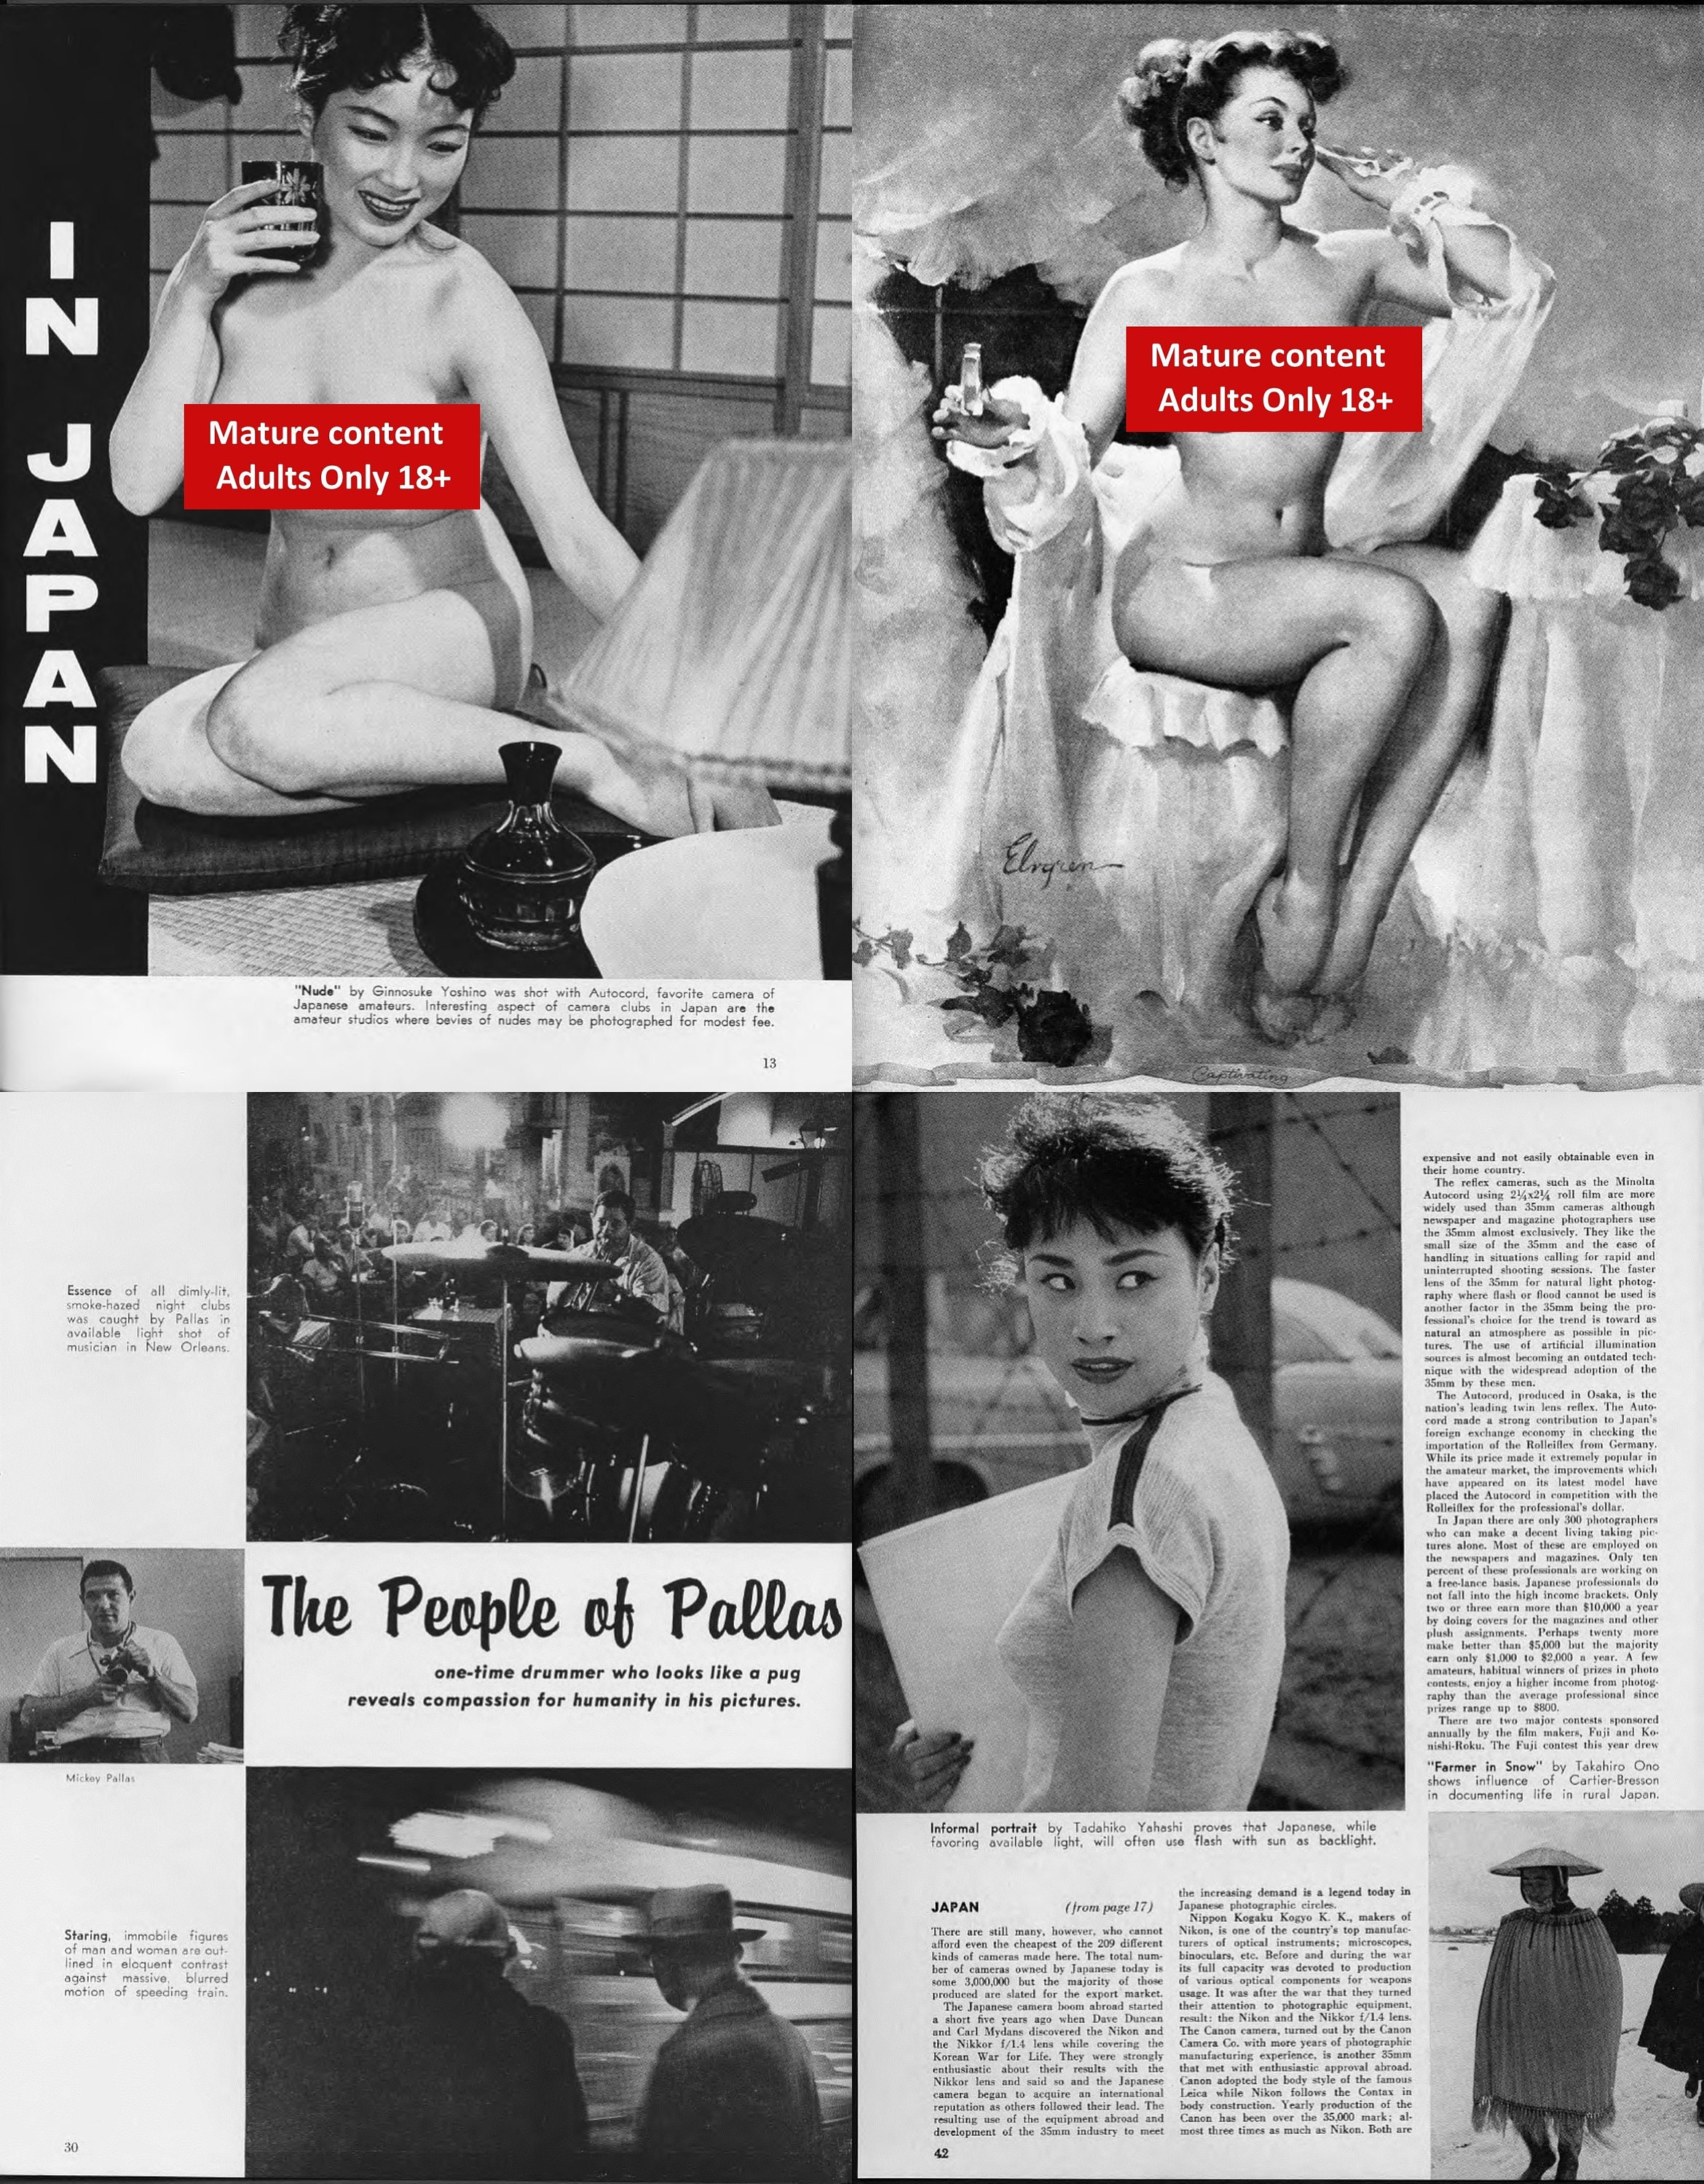 1950s nude magazine